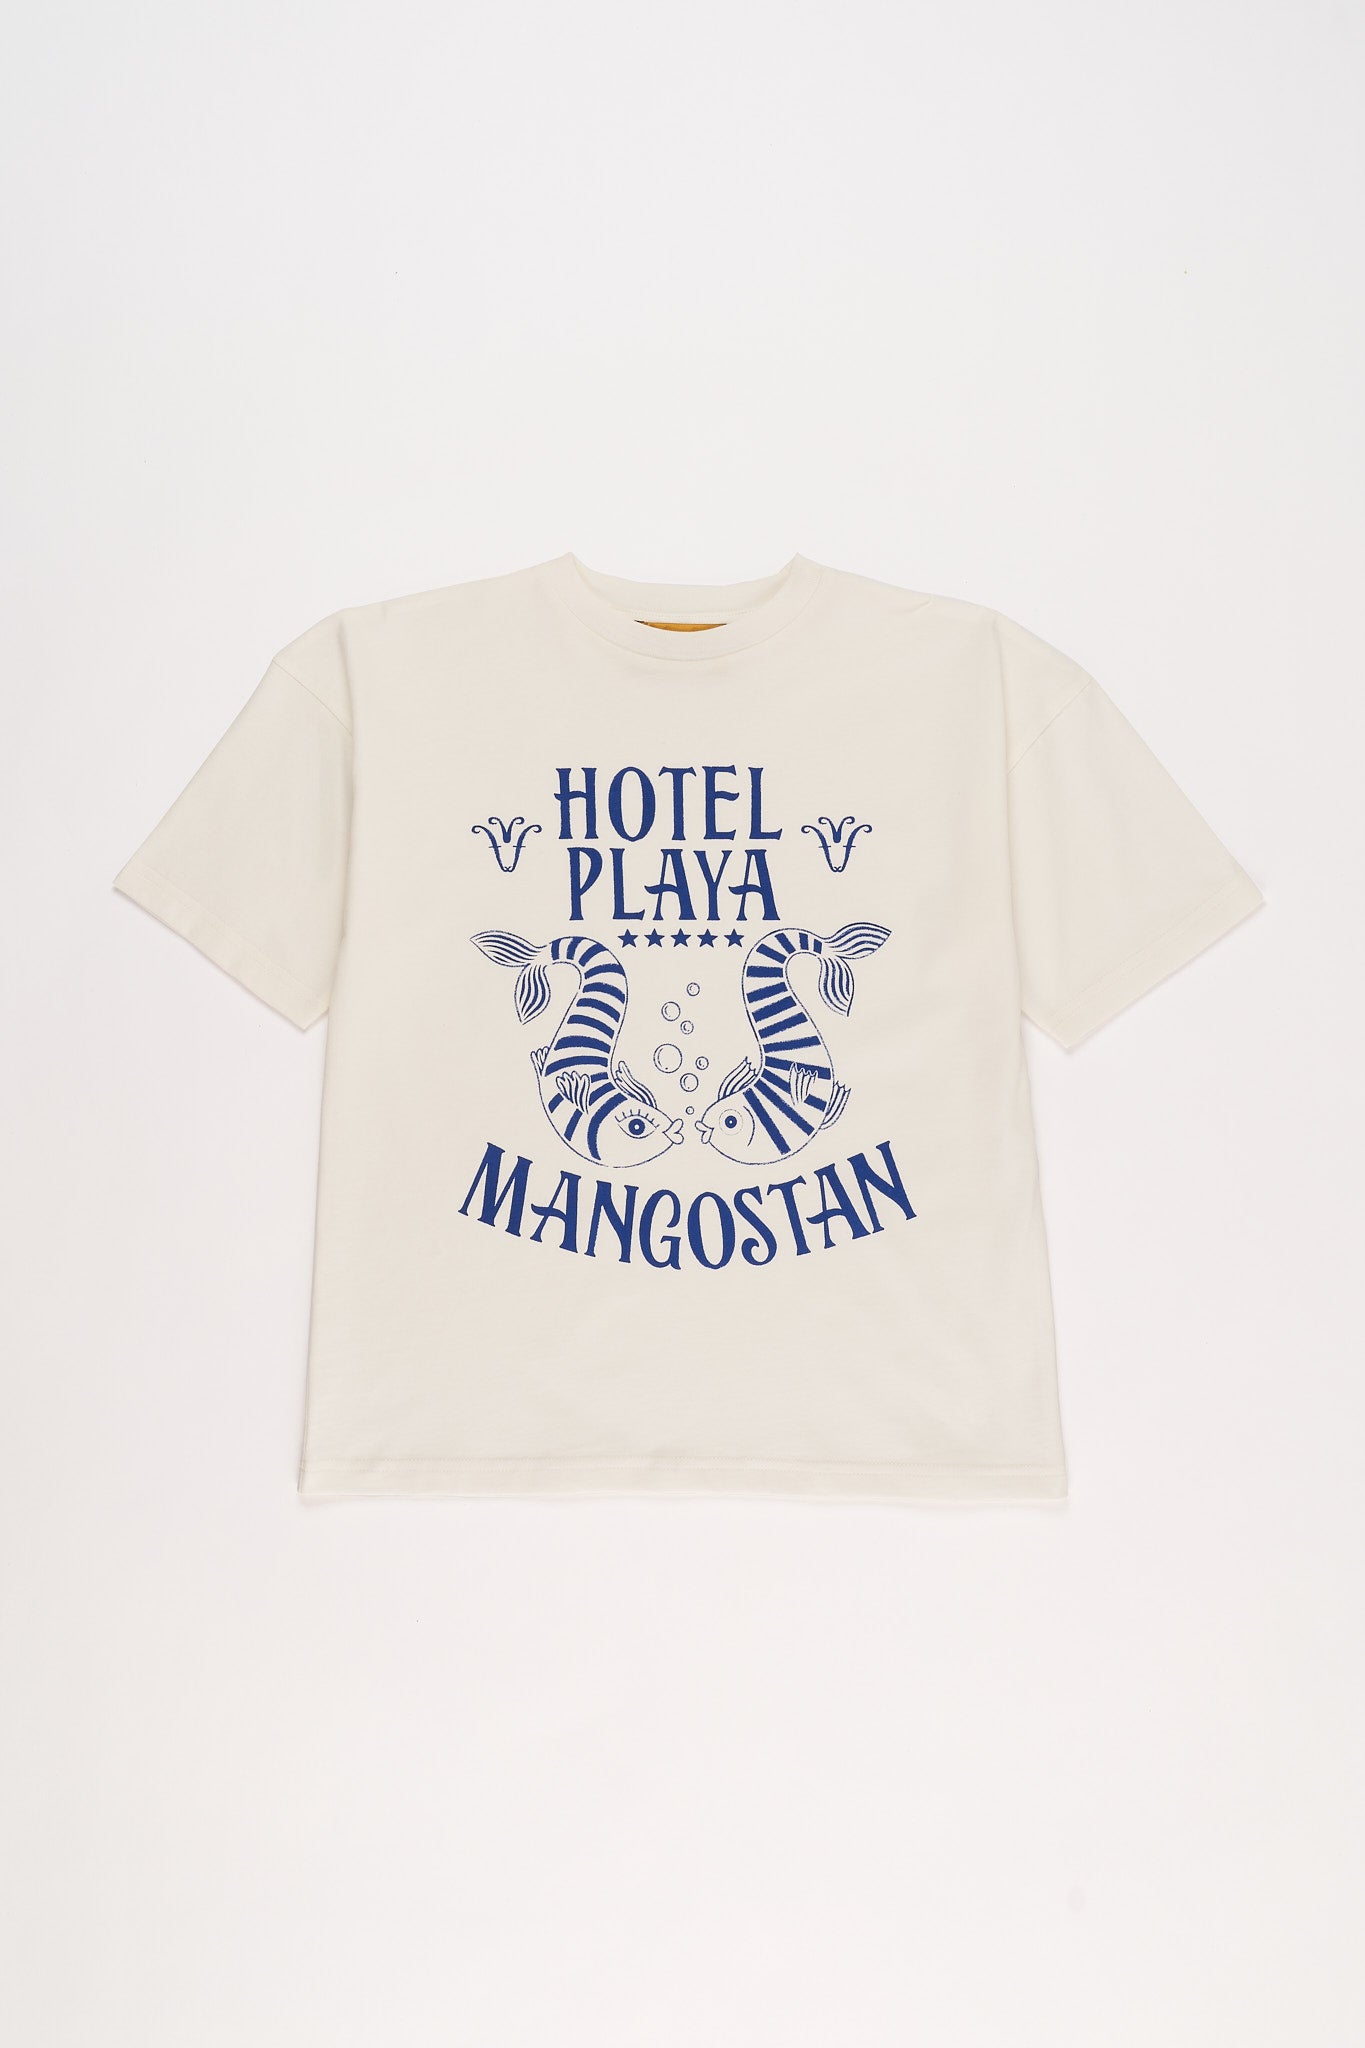 Maison Mangostan - hotel playa t-shirt - white